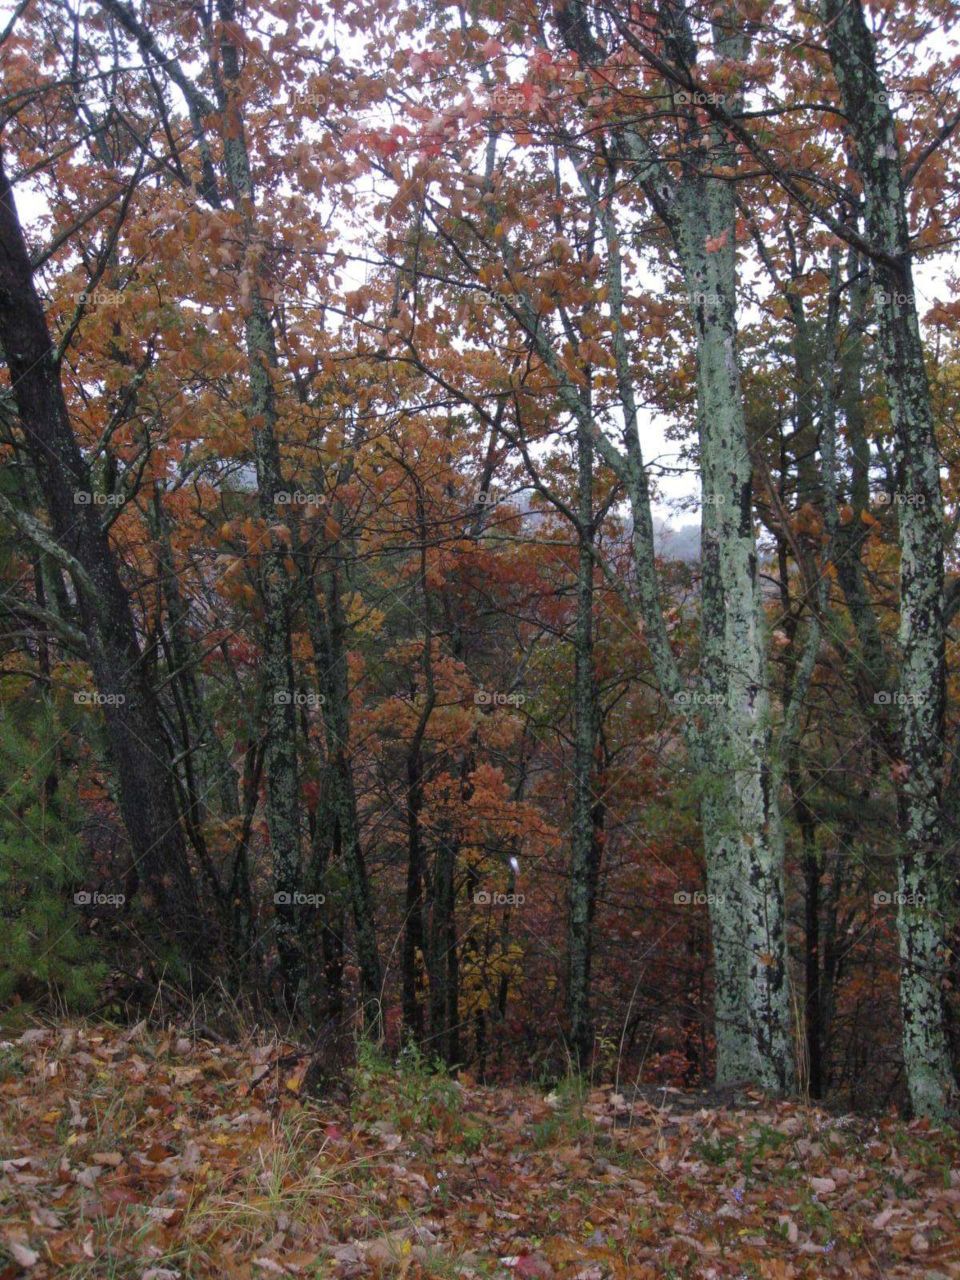 Fall, Leaf, Tree, Wood, Landscape